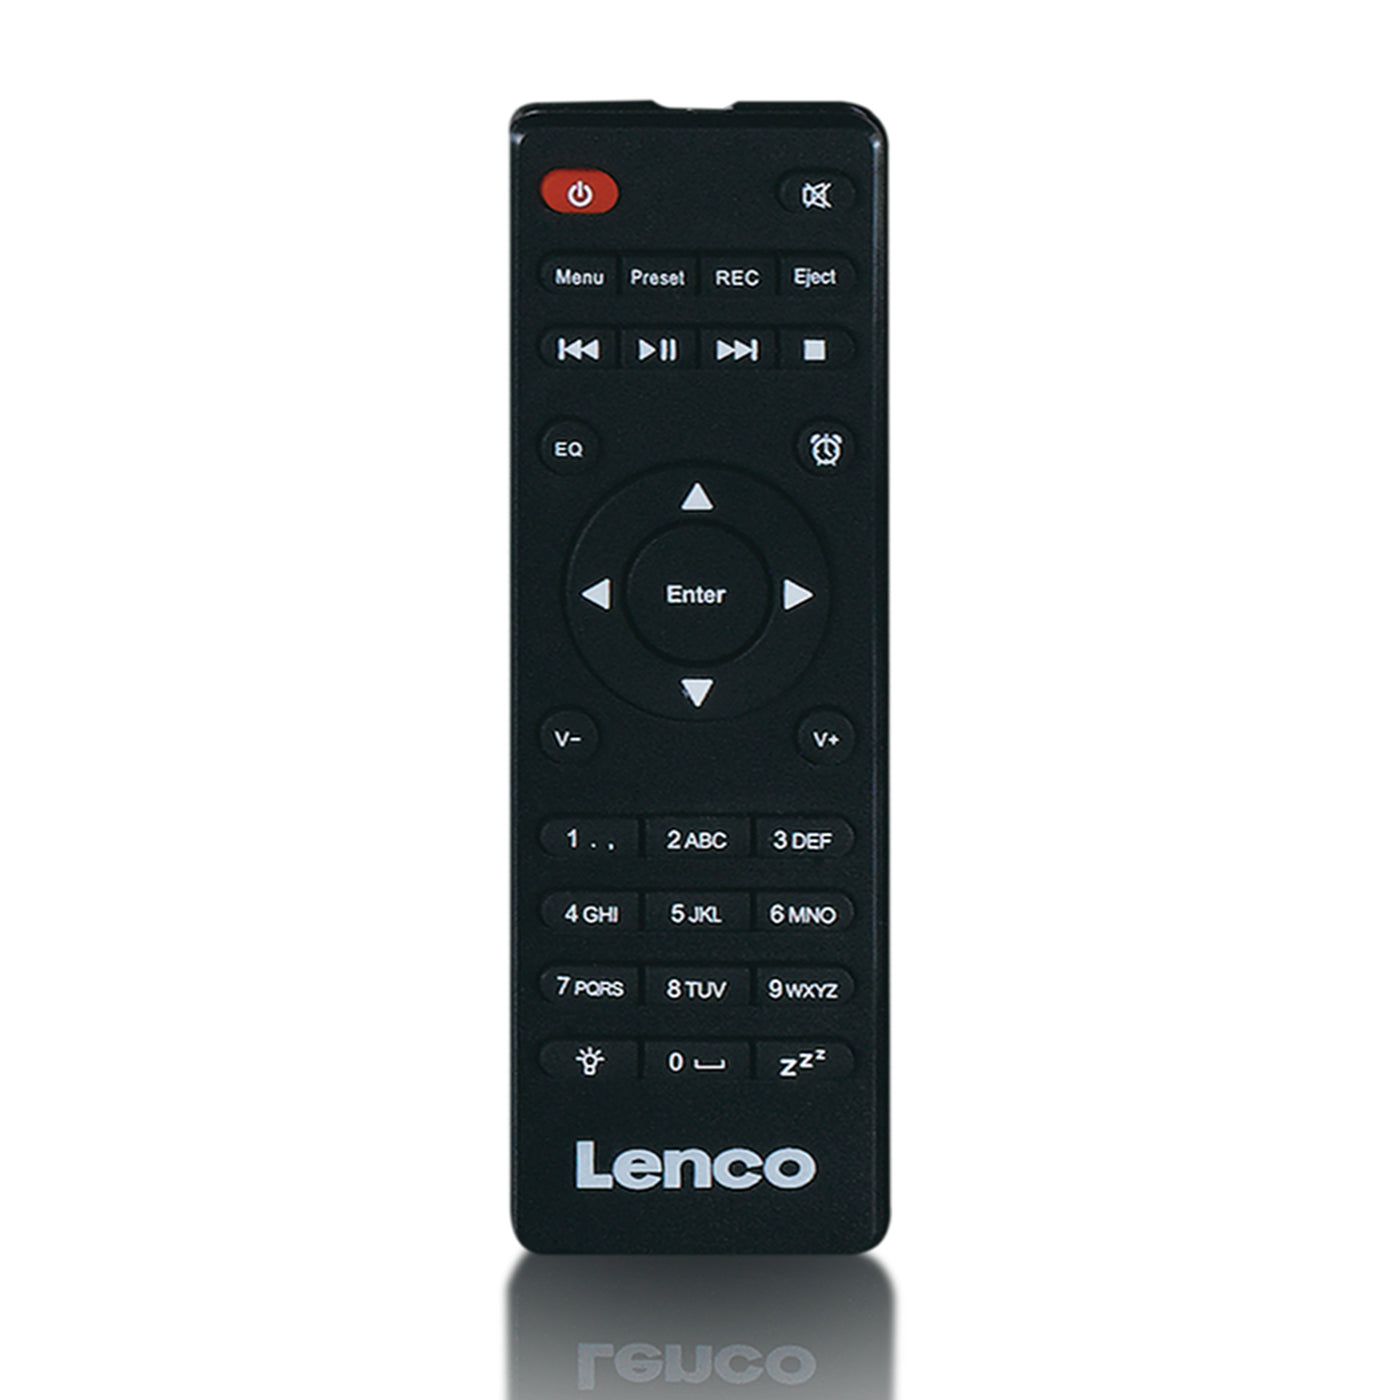 LENCO MC-460BK - Hifi set DAB+ Lenco radio - FM with -Catalog internet, – Black and